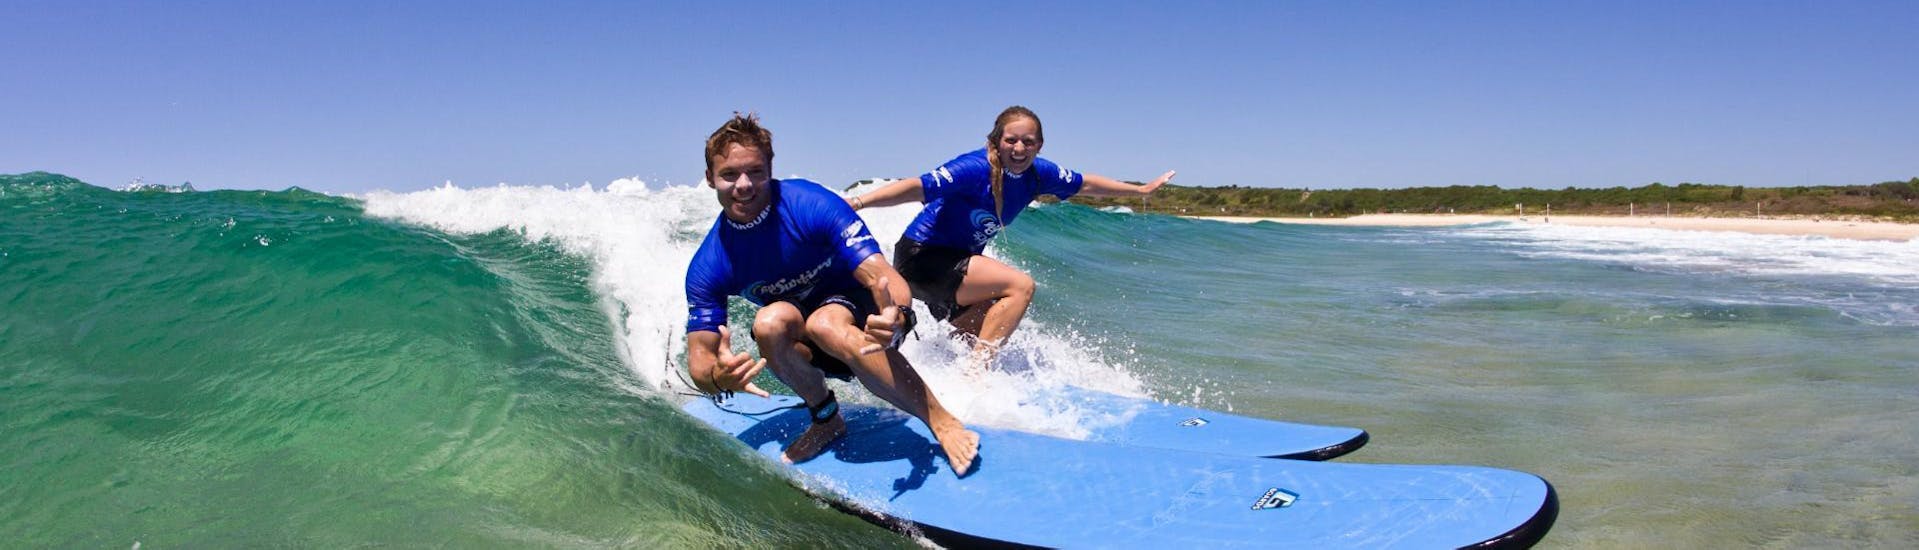 Lezioni di surf a Maroubra da 12 anni per principianti.